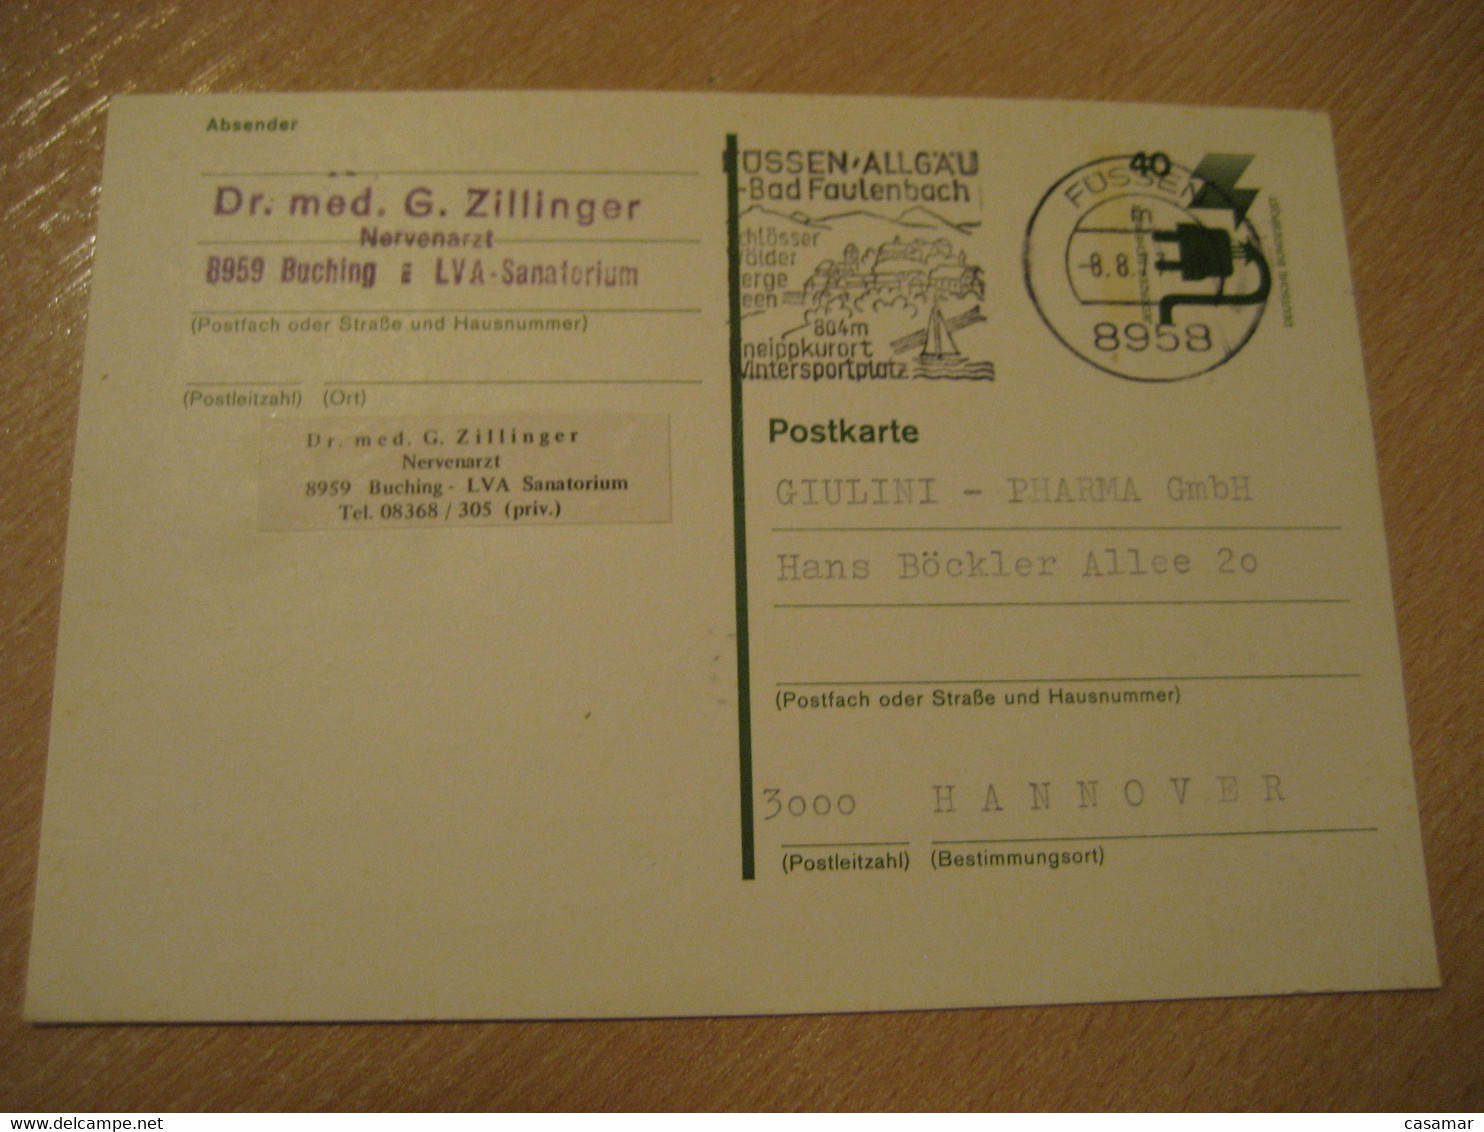 FUSSEN 1977 Bad Faulenbach Kneipkurort Thermal Health Sante Cancel Card GERMANY - Kuurwezen